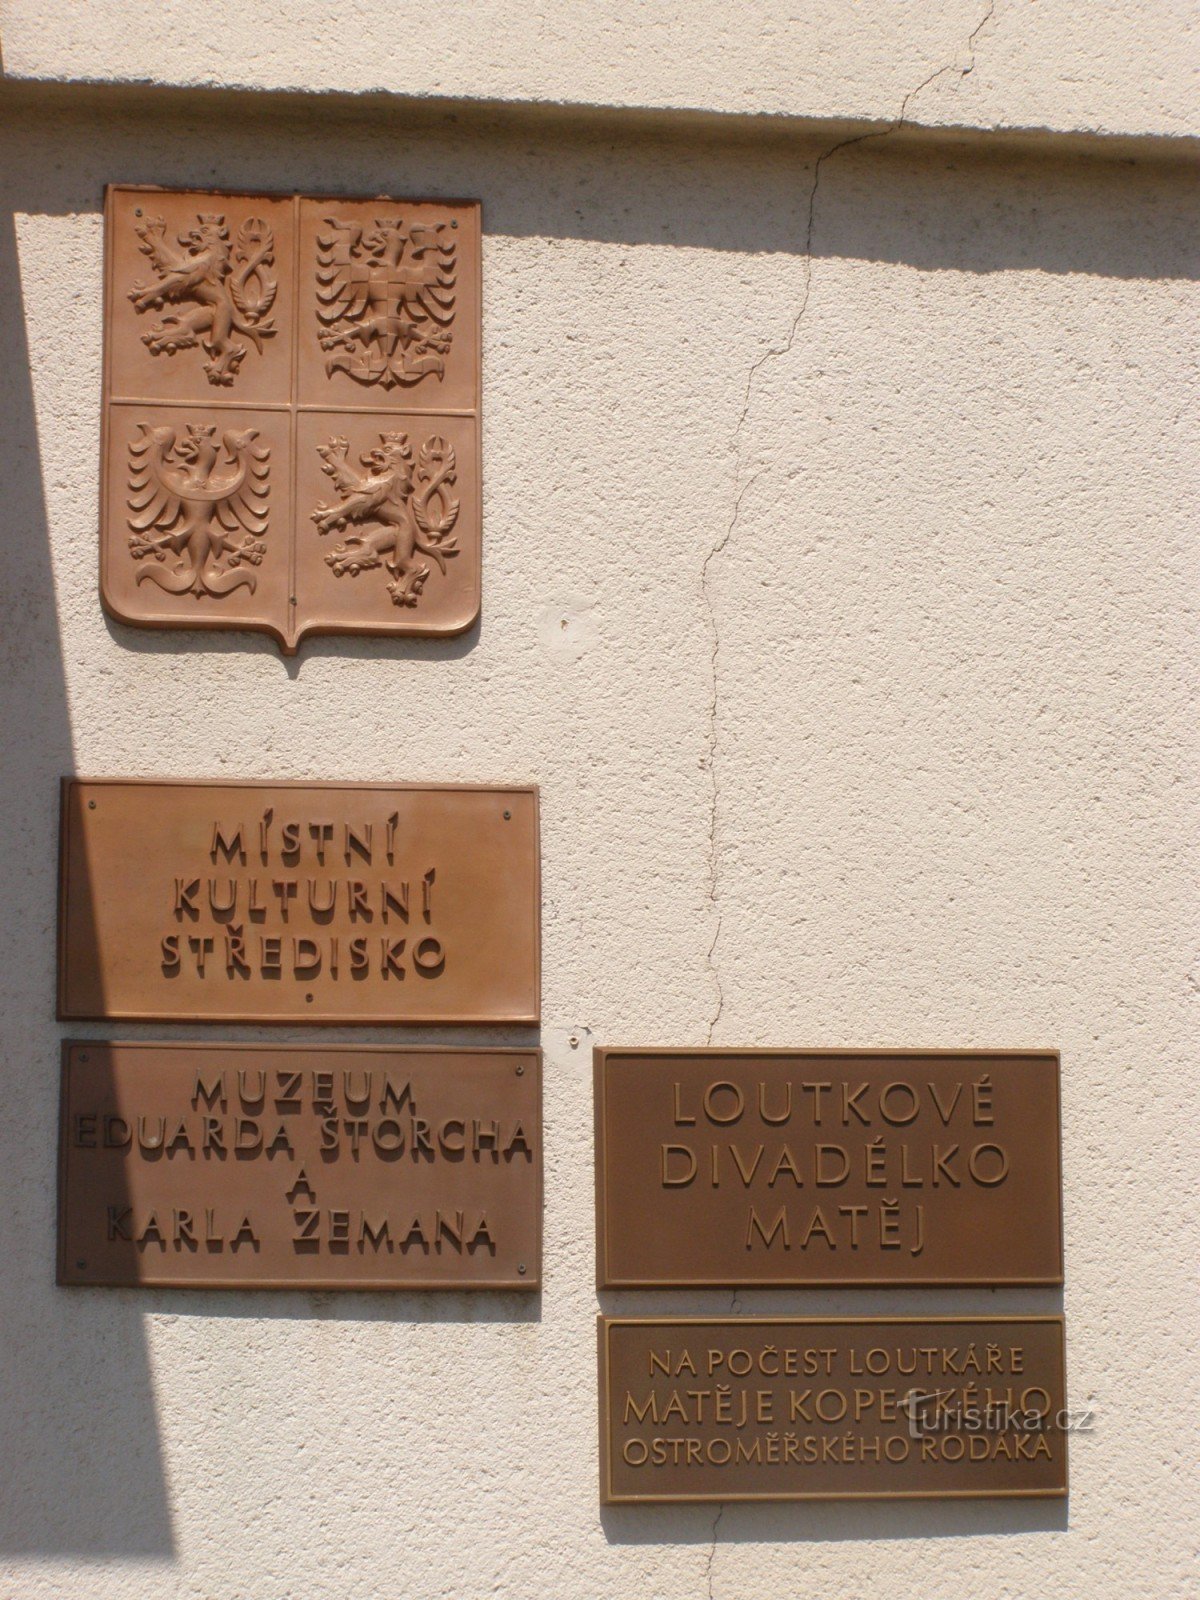 Ostroměř - muzej Eduarda Štorcha i Karela Zemana